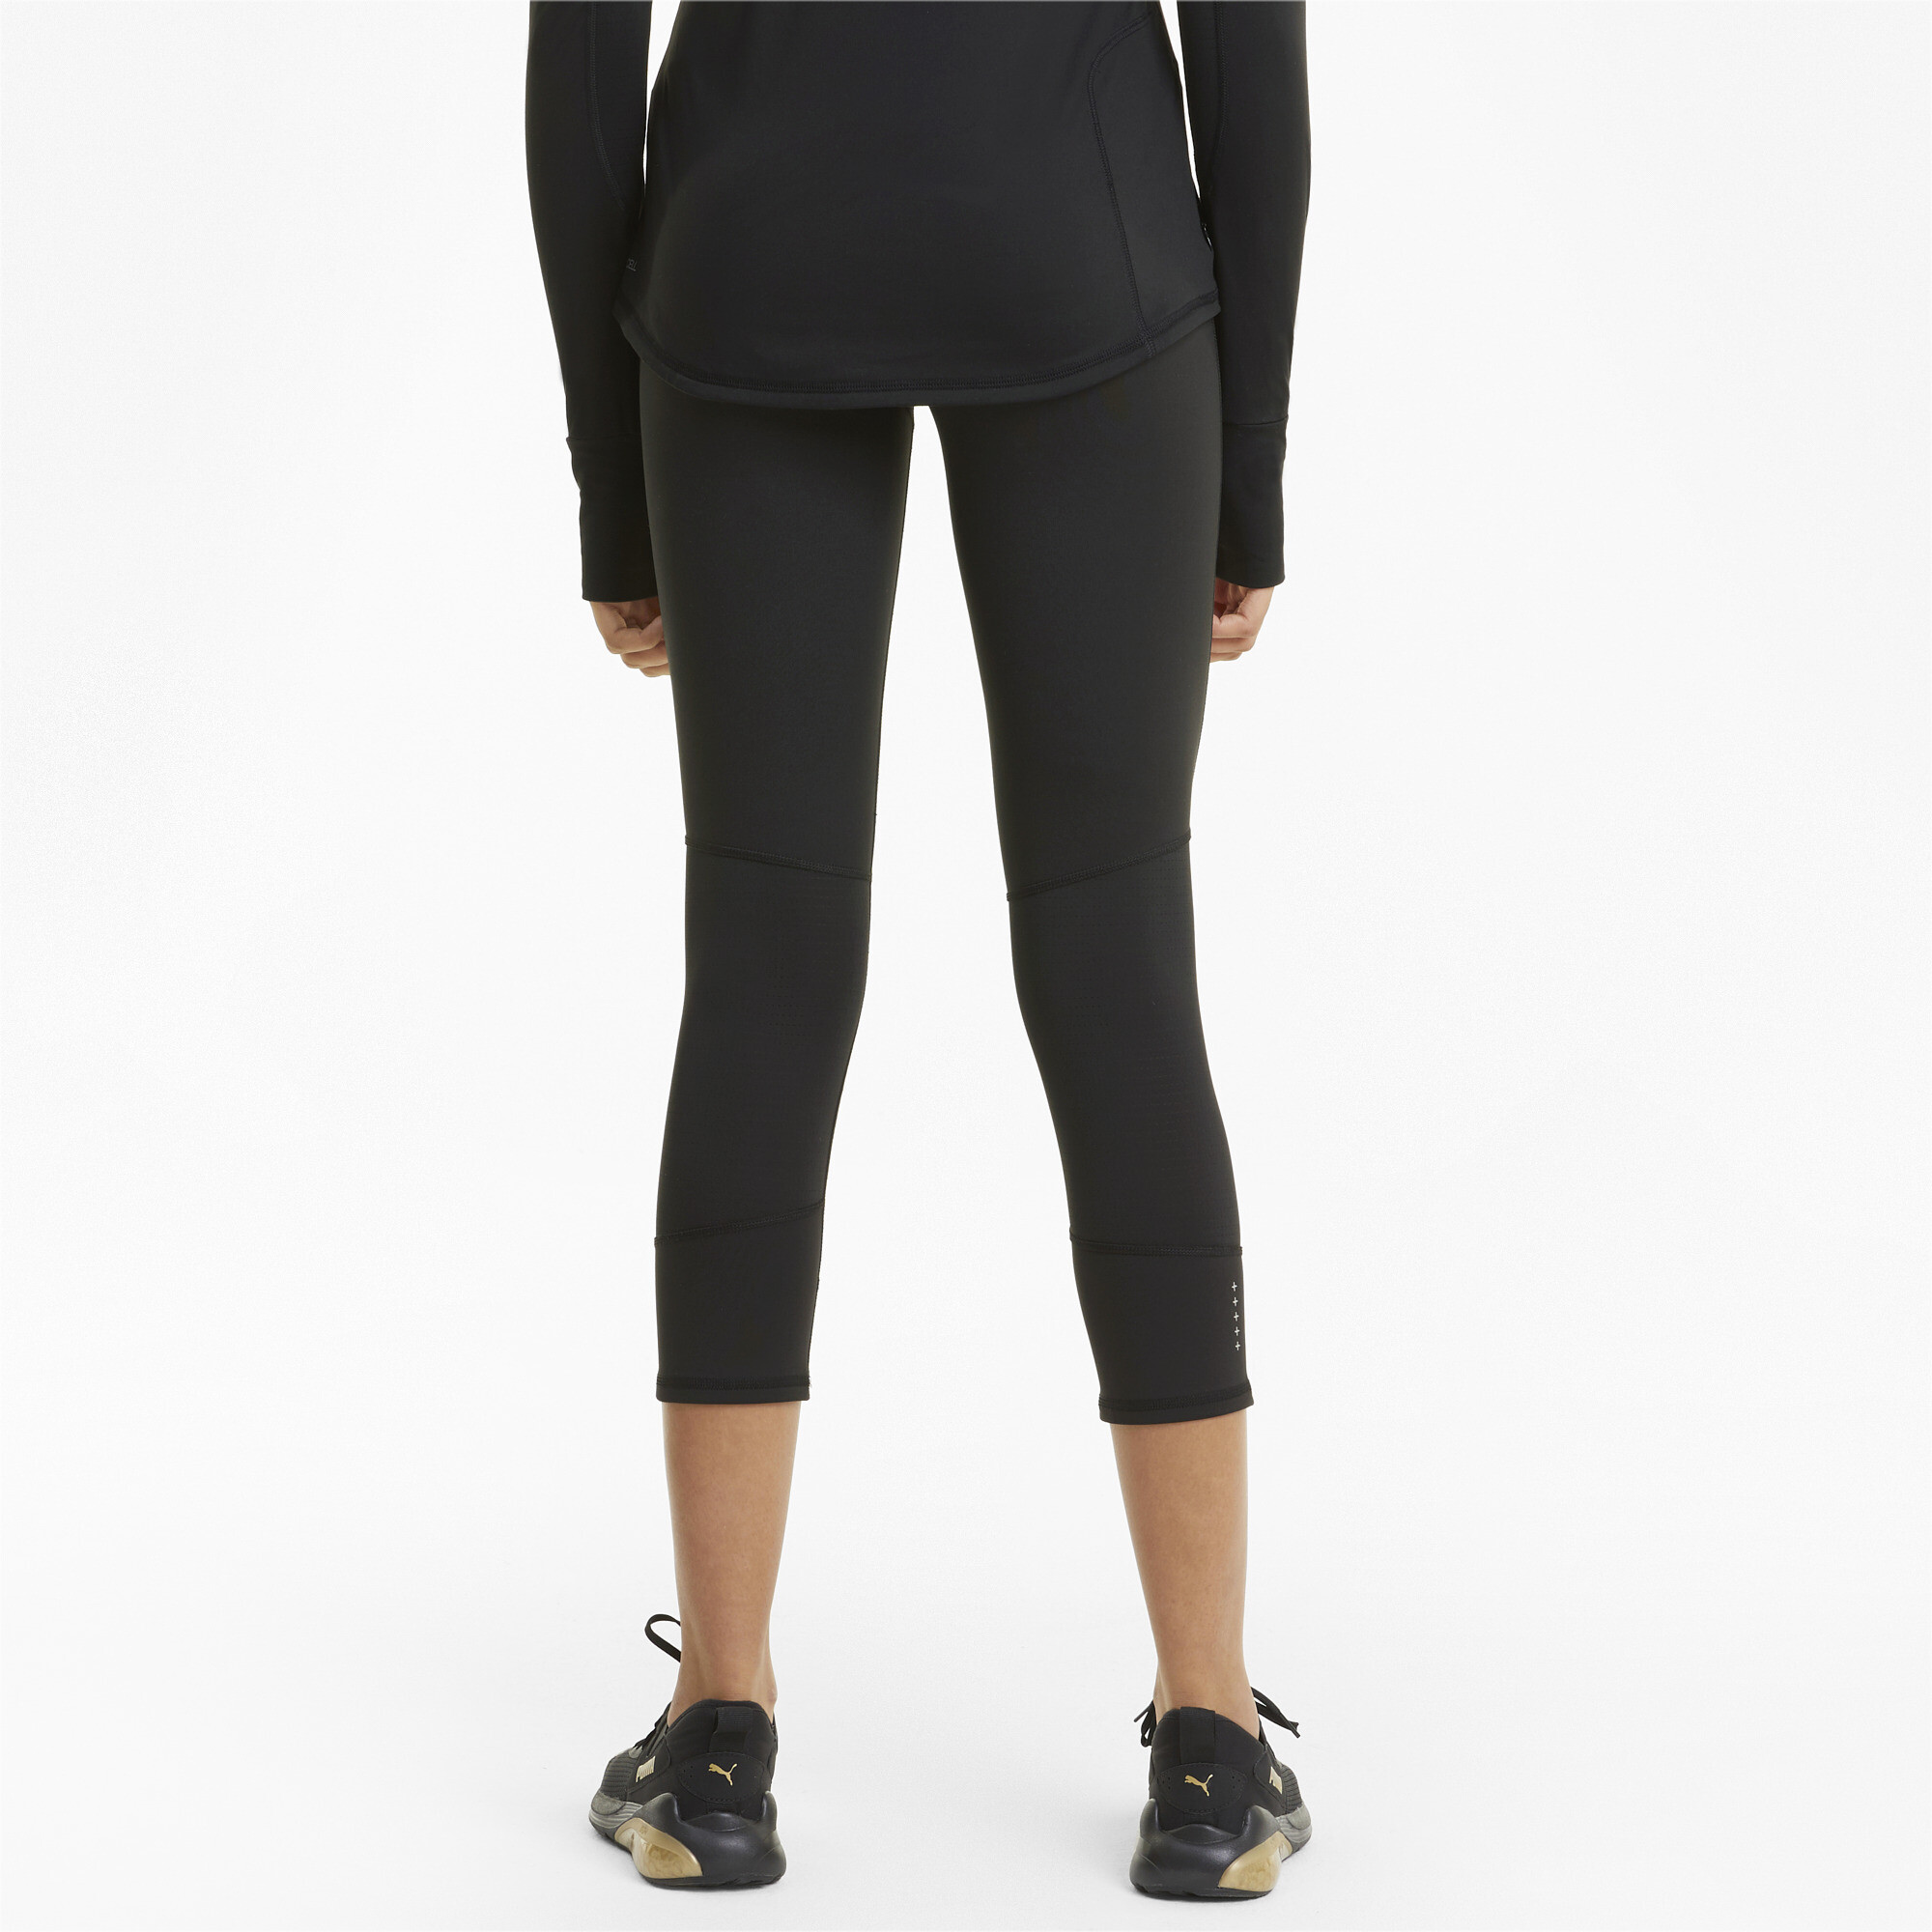 Women's PUMA Favourite 3/4 Running Leggings In Black, Size Small